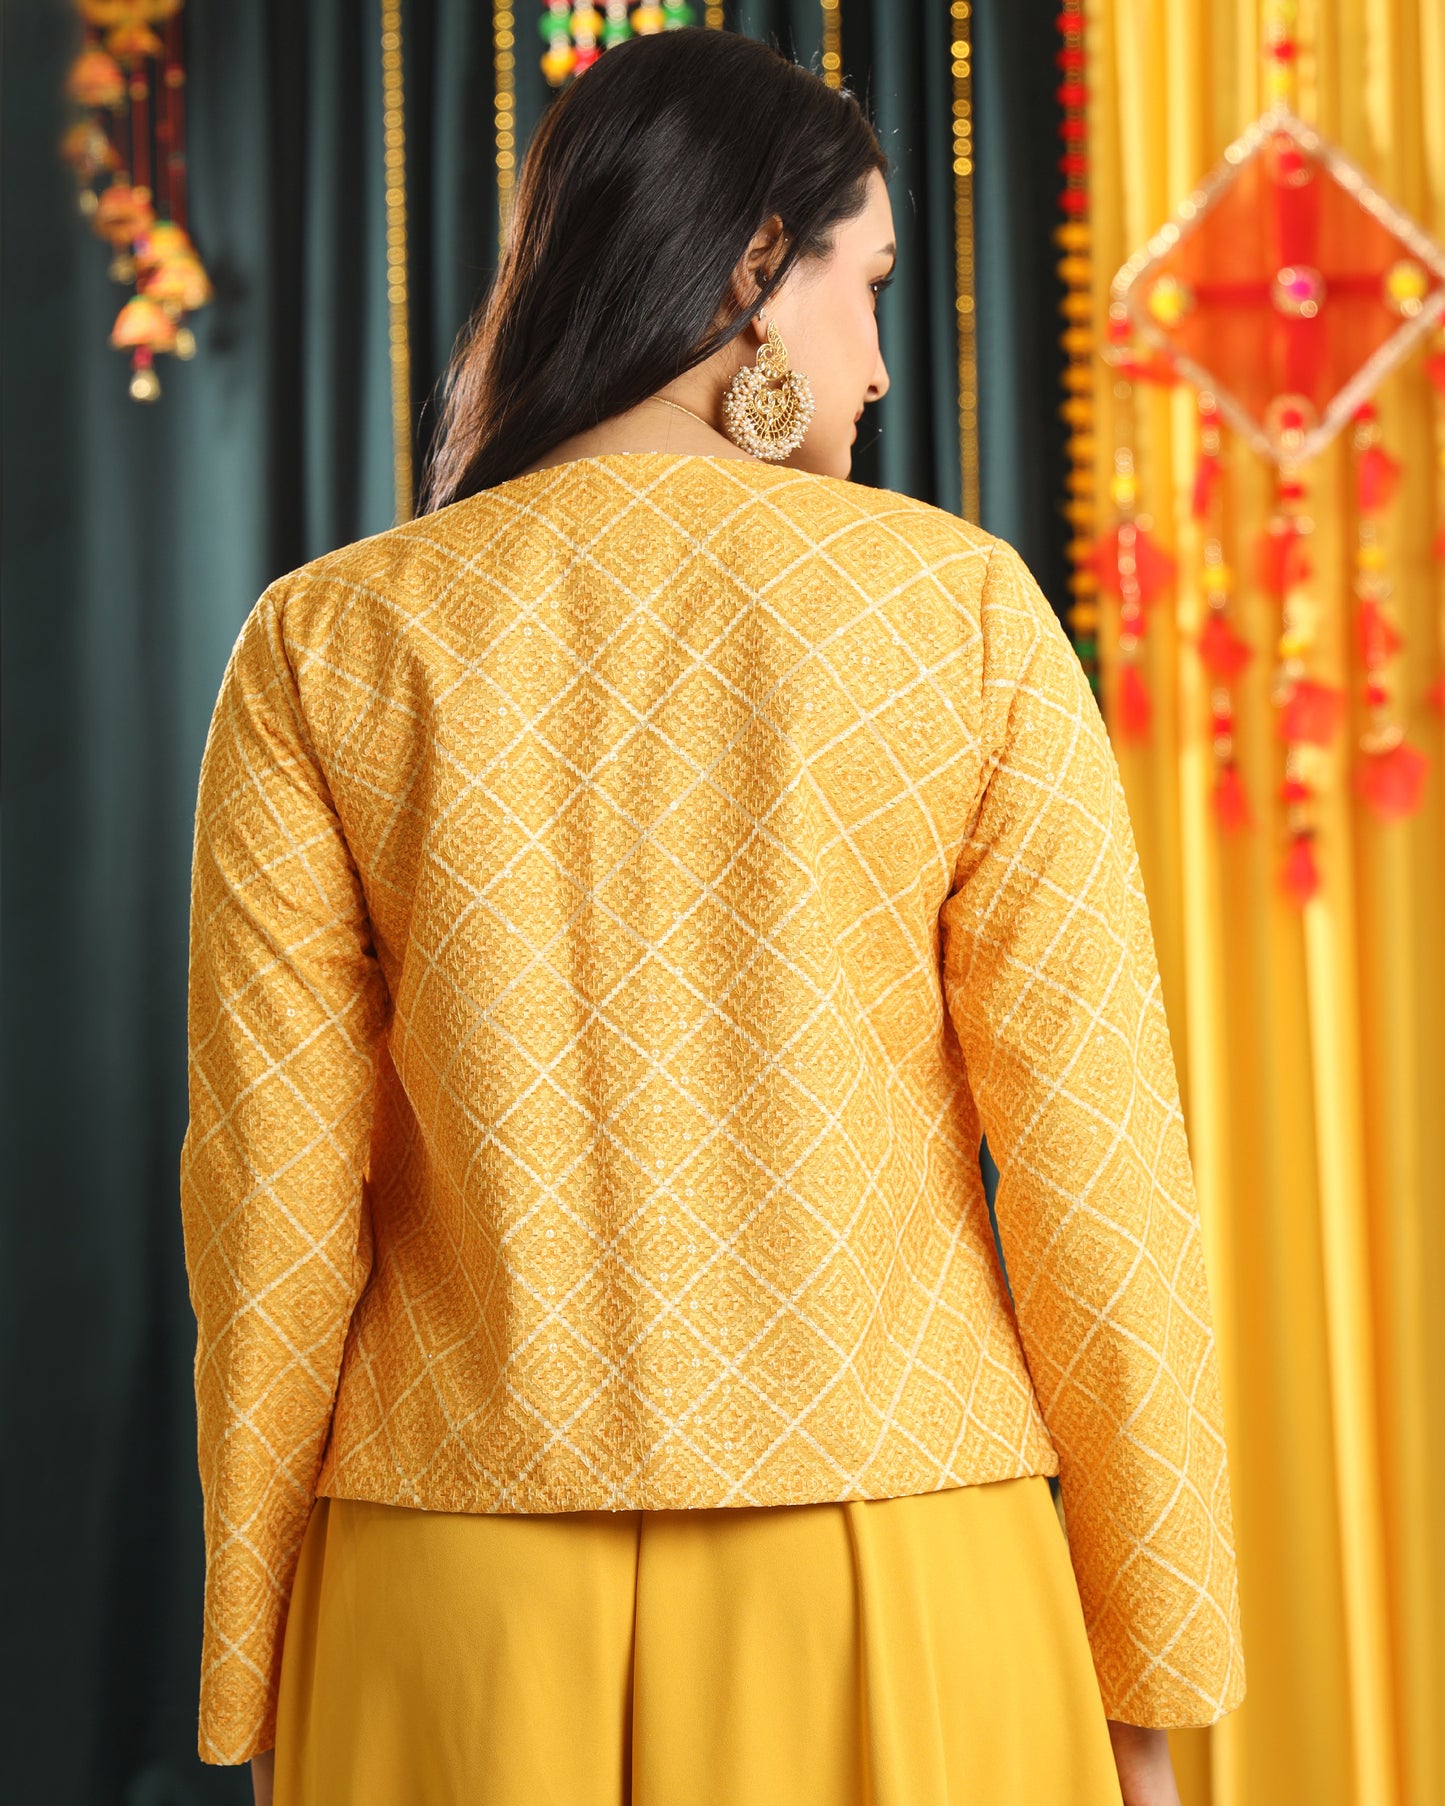 Haldi Ready! Women's Embroidered Yellow Jacket